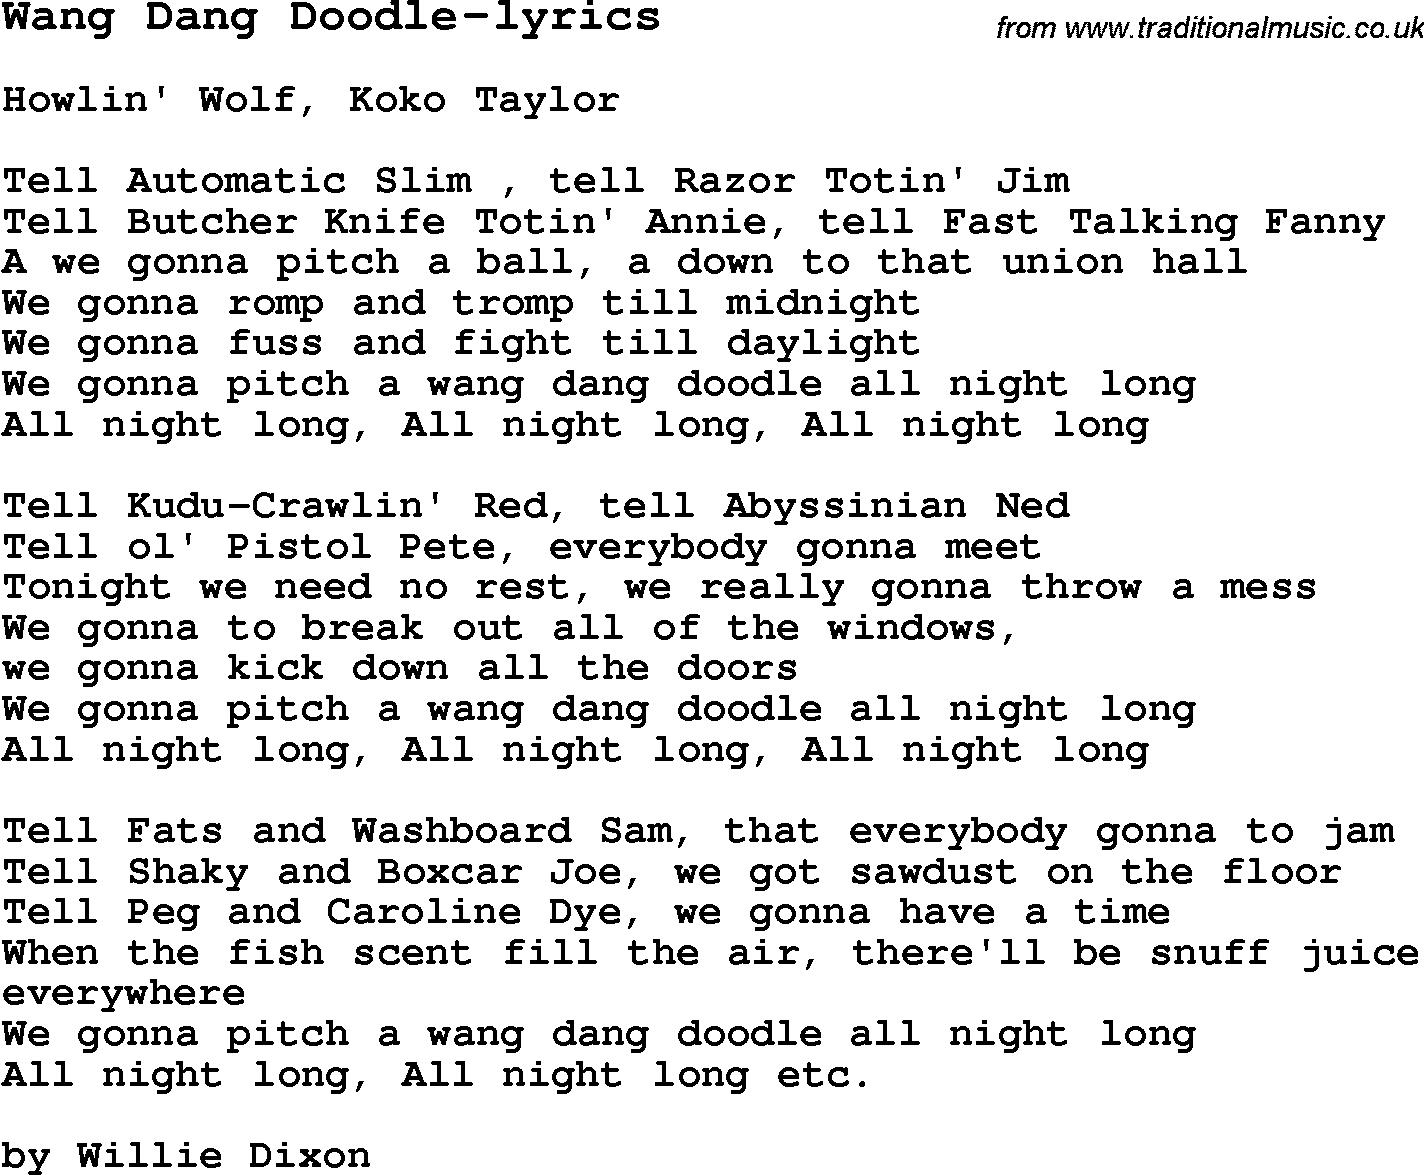 Blues Guitar Song, lyrics, chords, tablature, playing hints for Wang Dang Doodle-lyrics